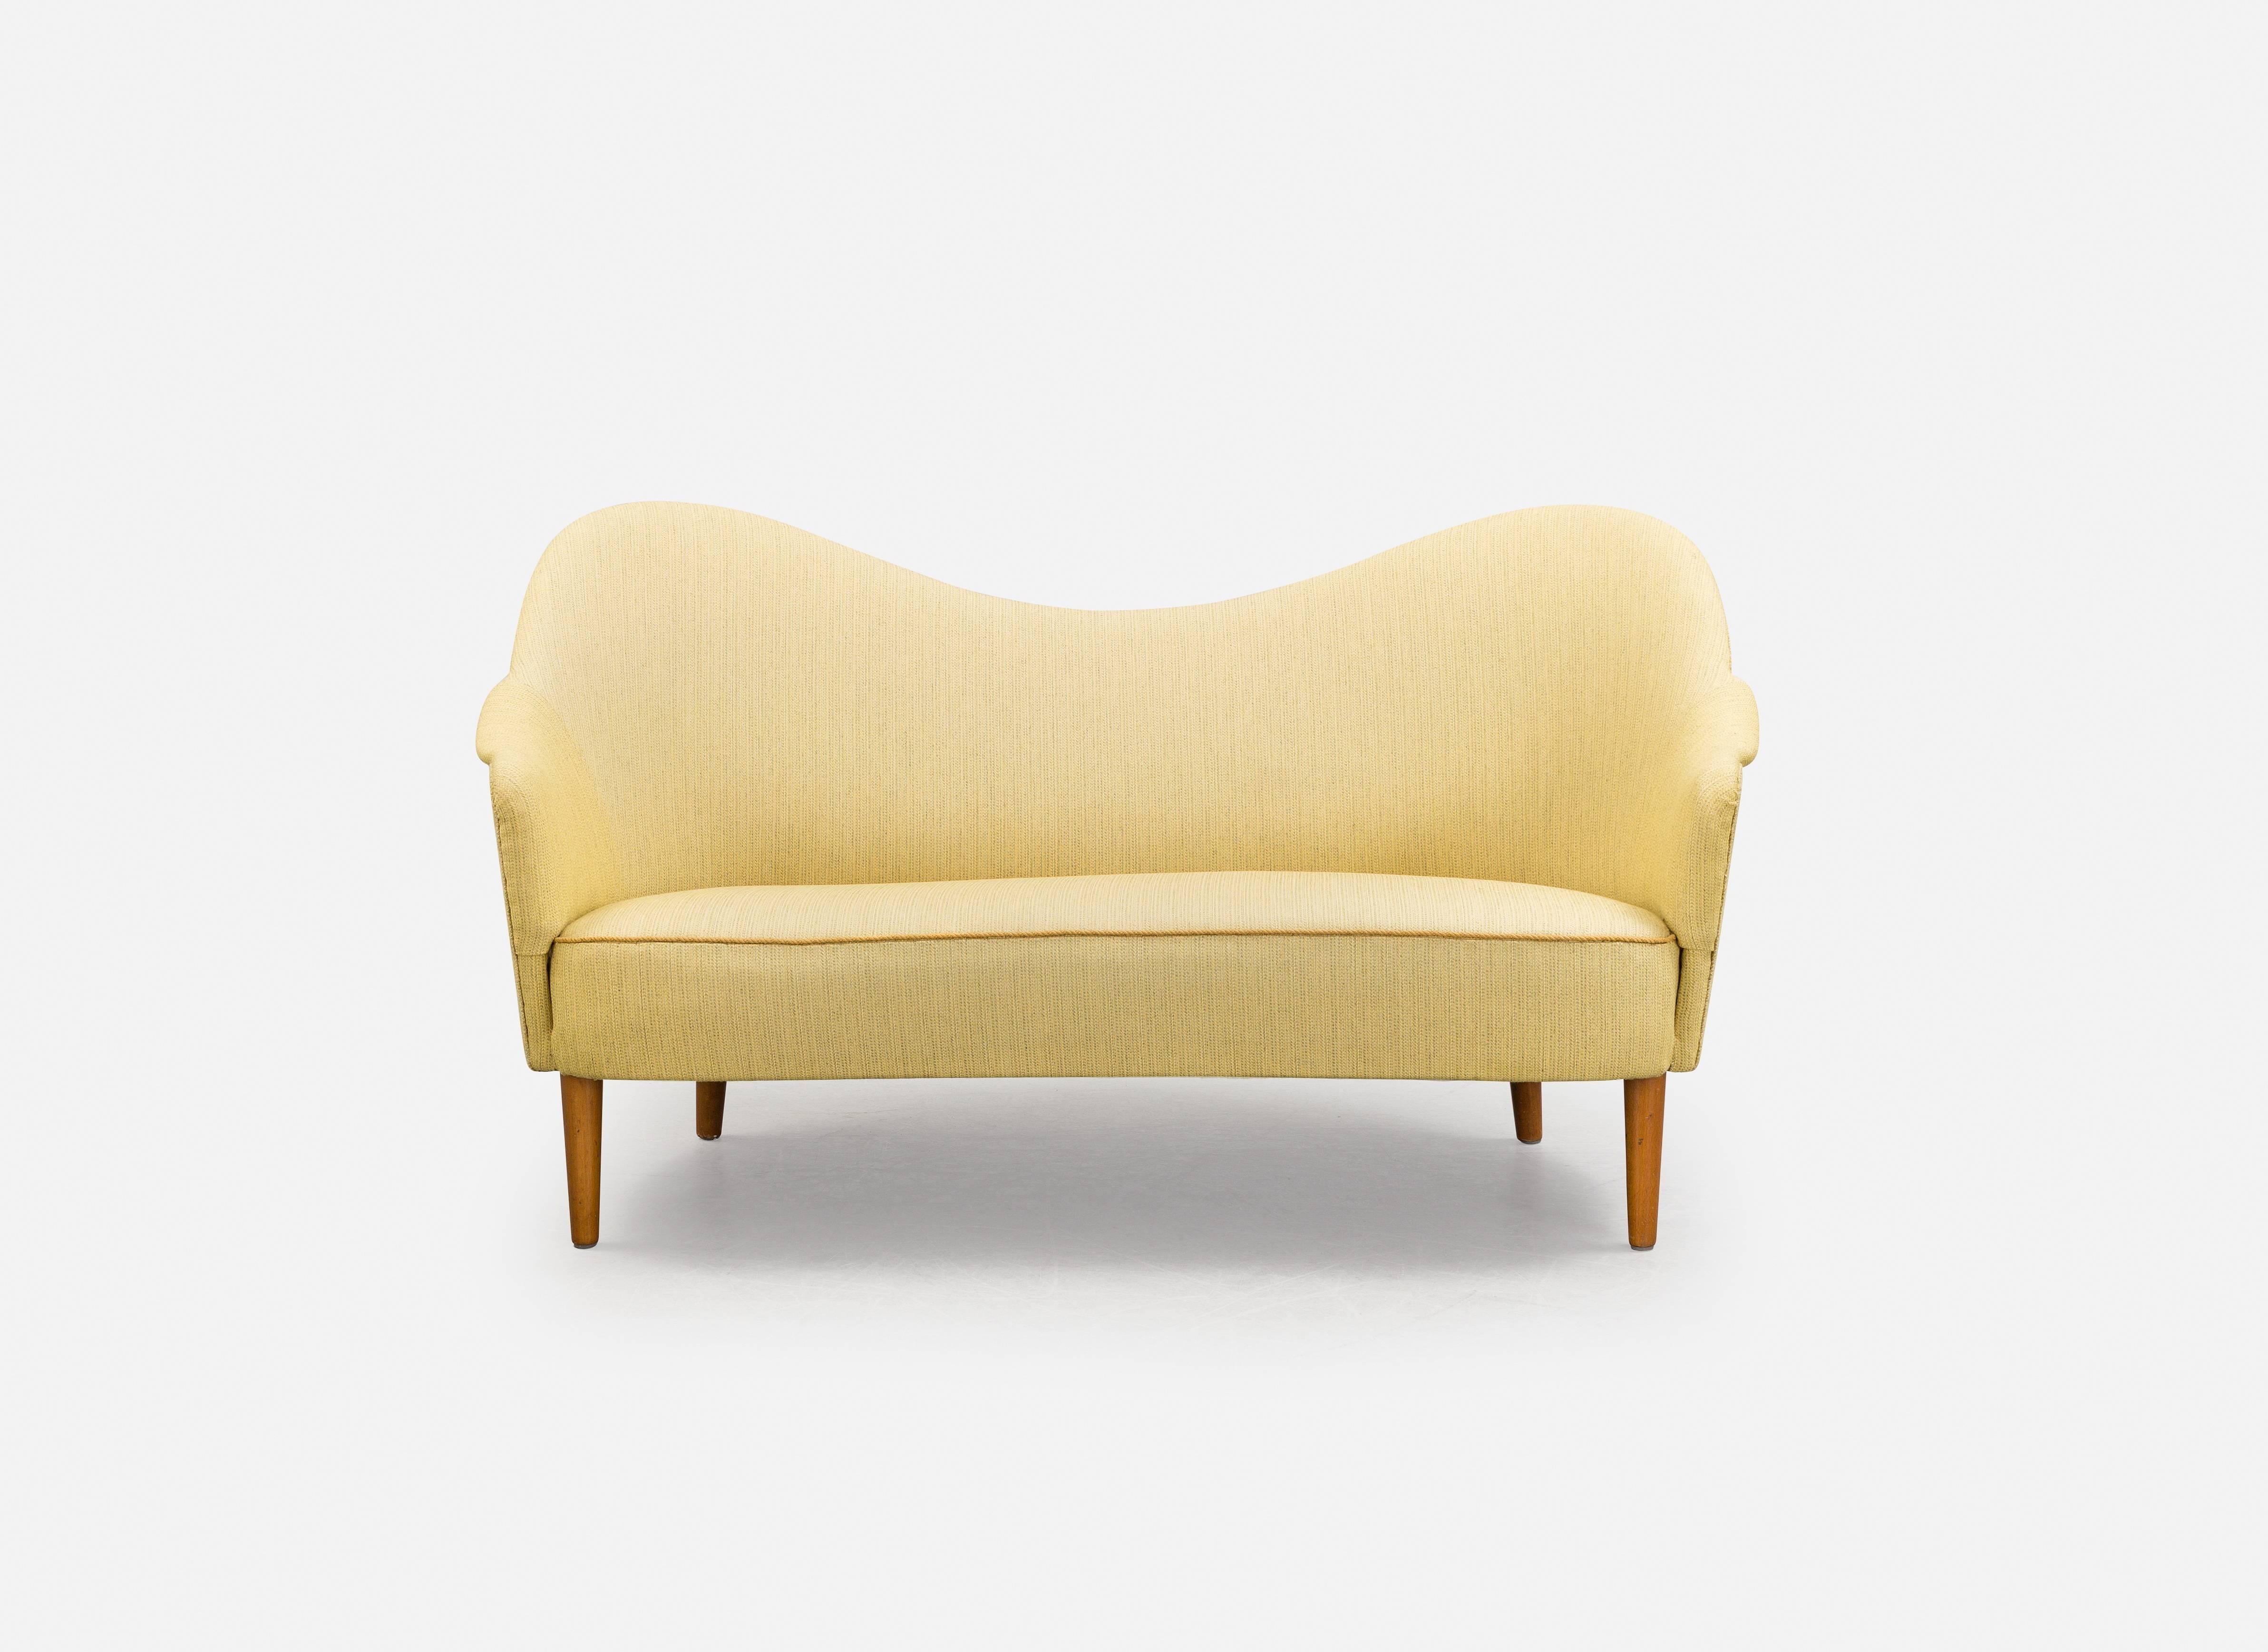 Swedish Carl Malmsten curved yellow Samspel sofa / loveseat, mid 20th Century, Sweden.